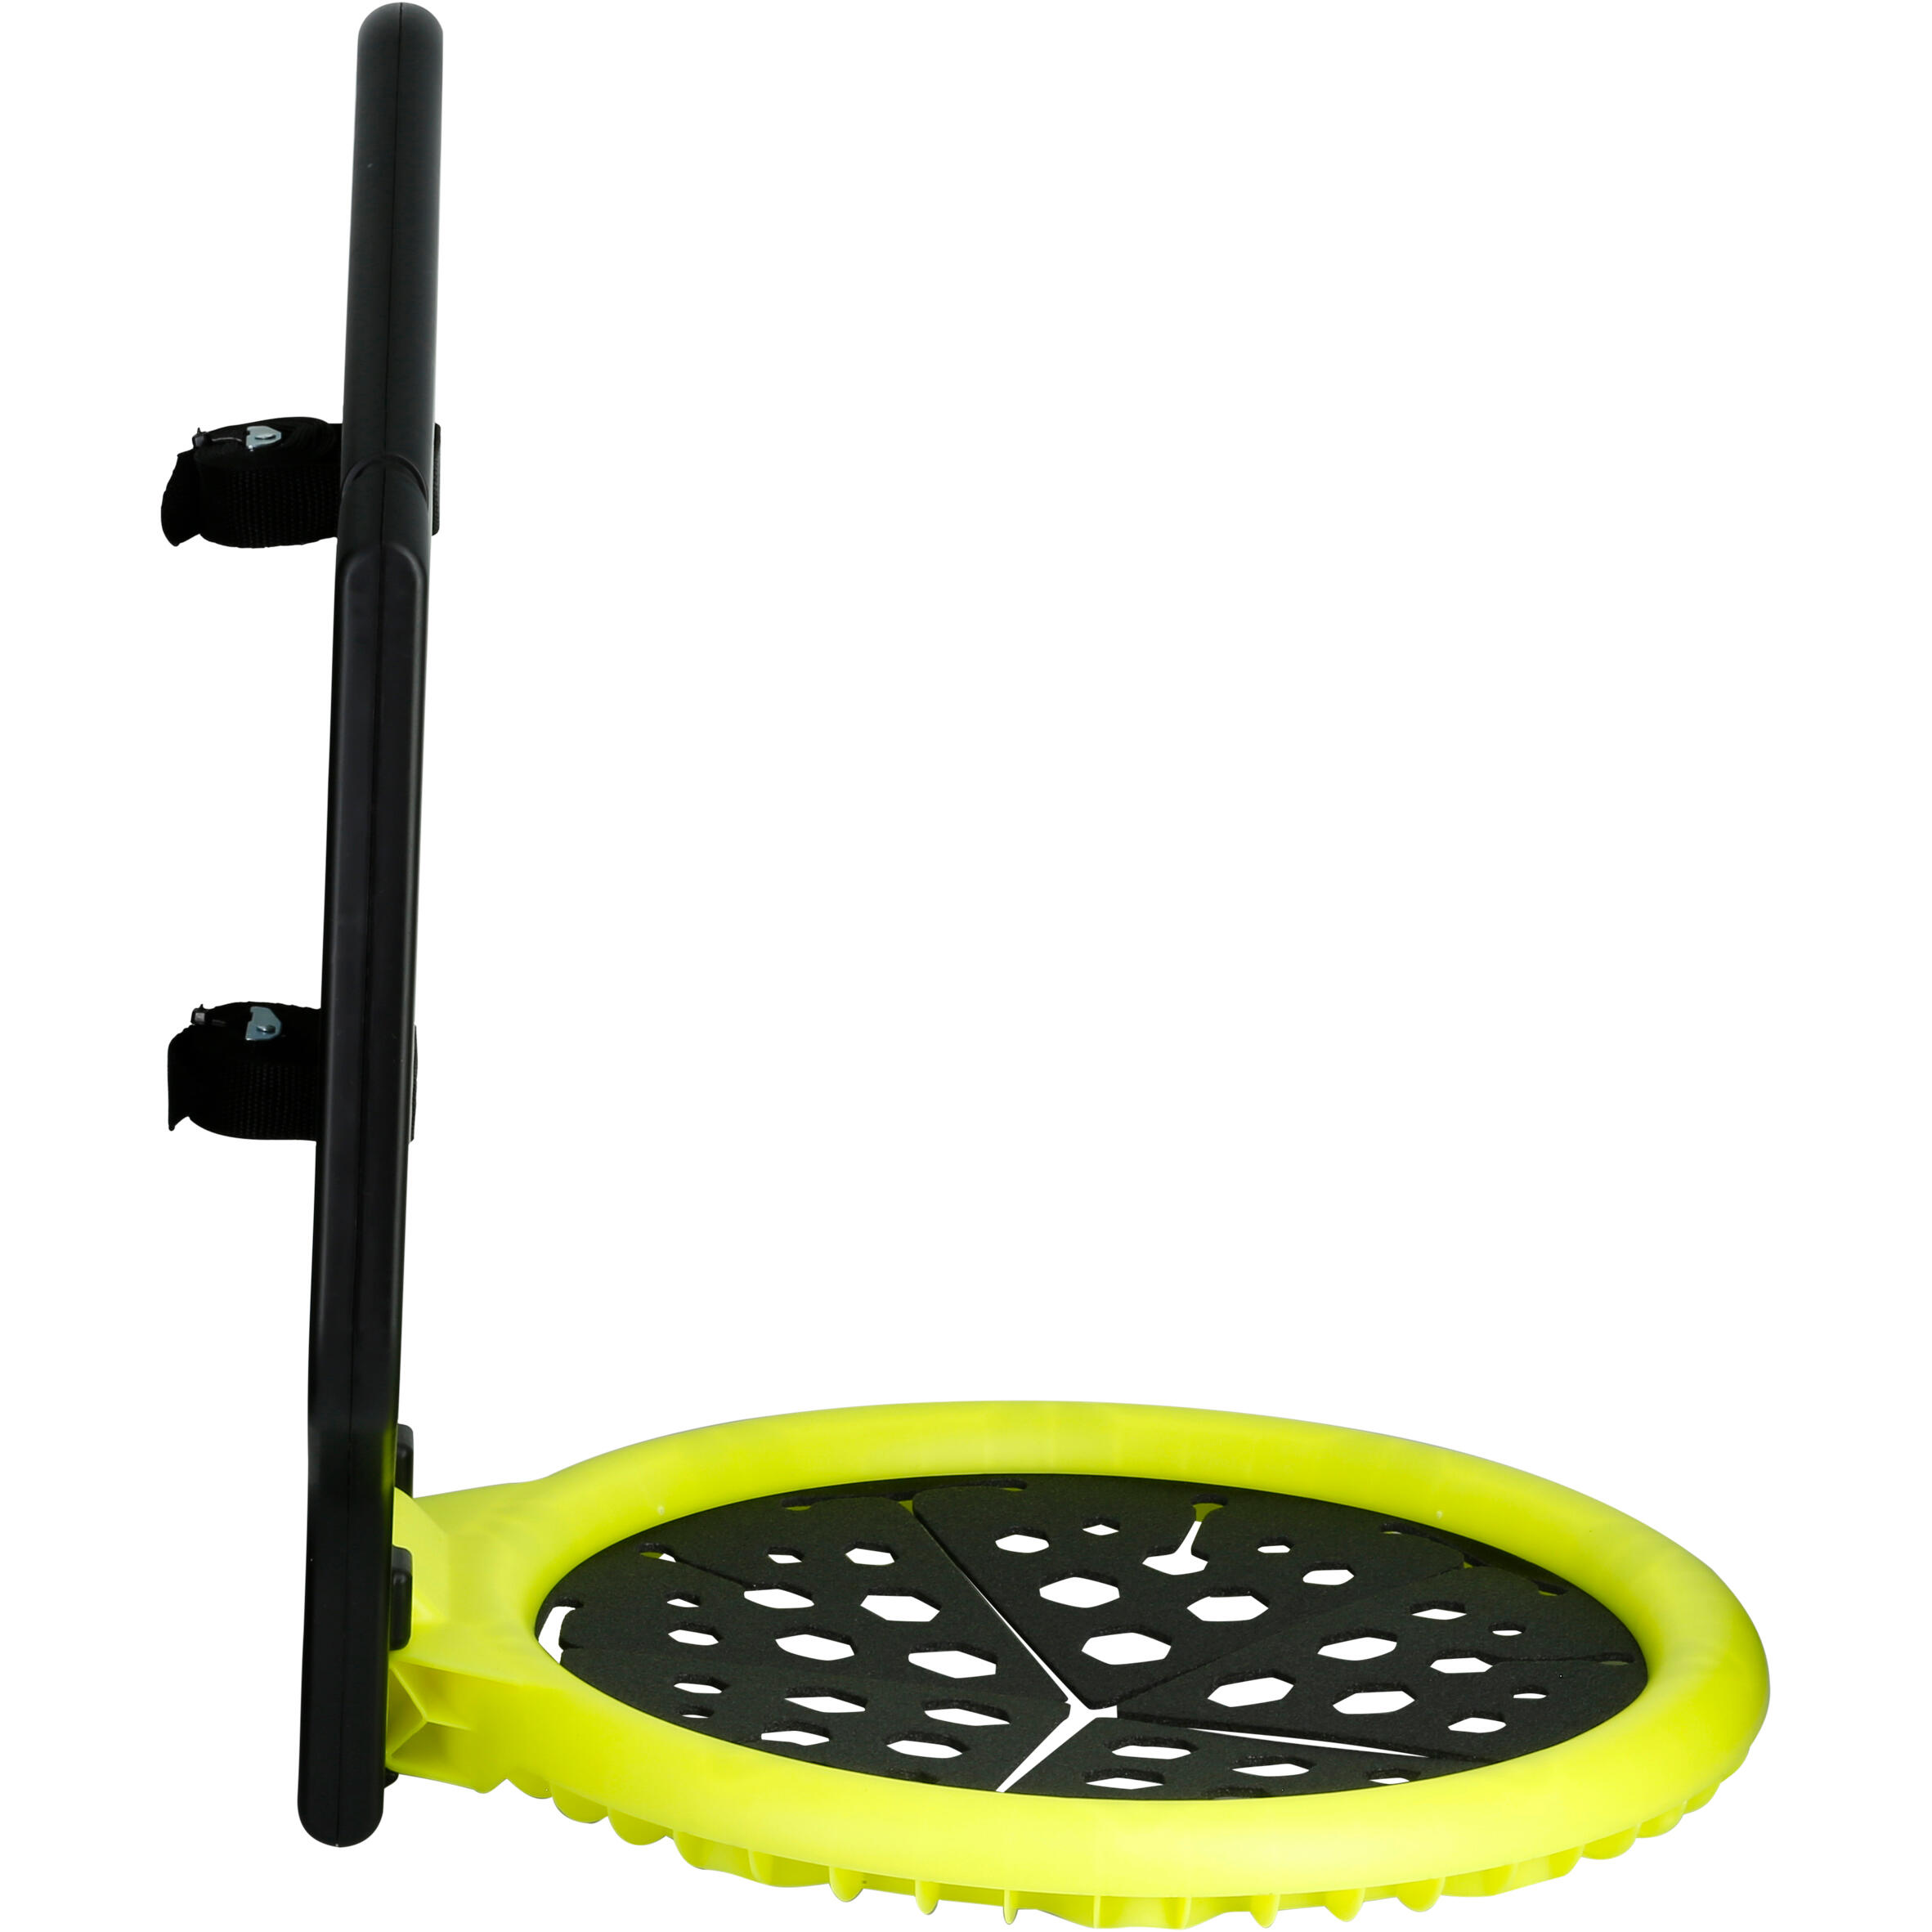 The Hoop Kids'/Adult Basketball Basket - Black/Yellow. Take it anywhere! 6/9